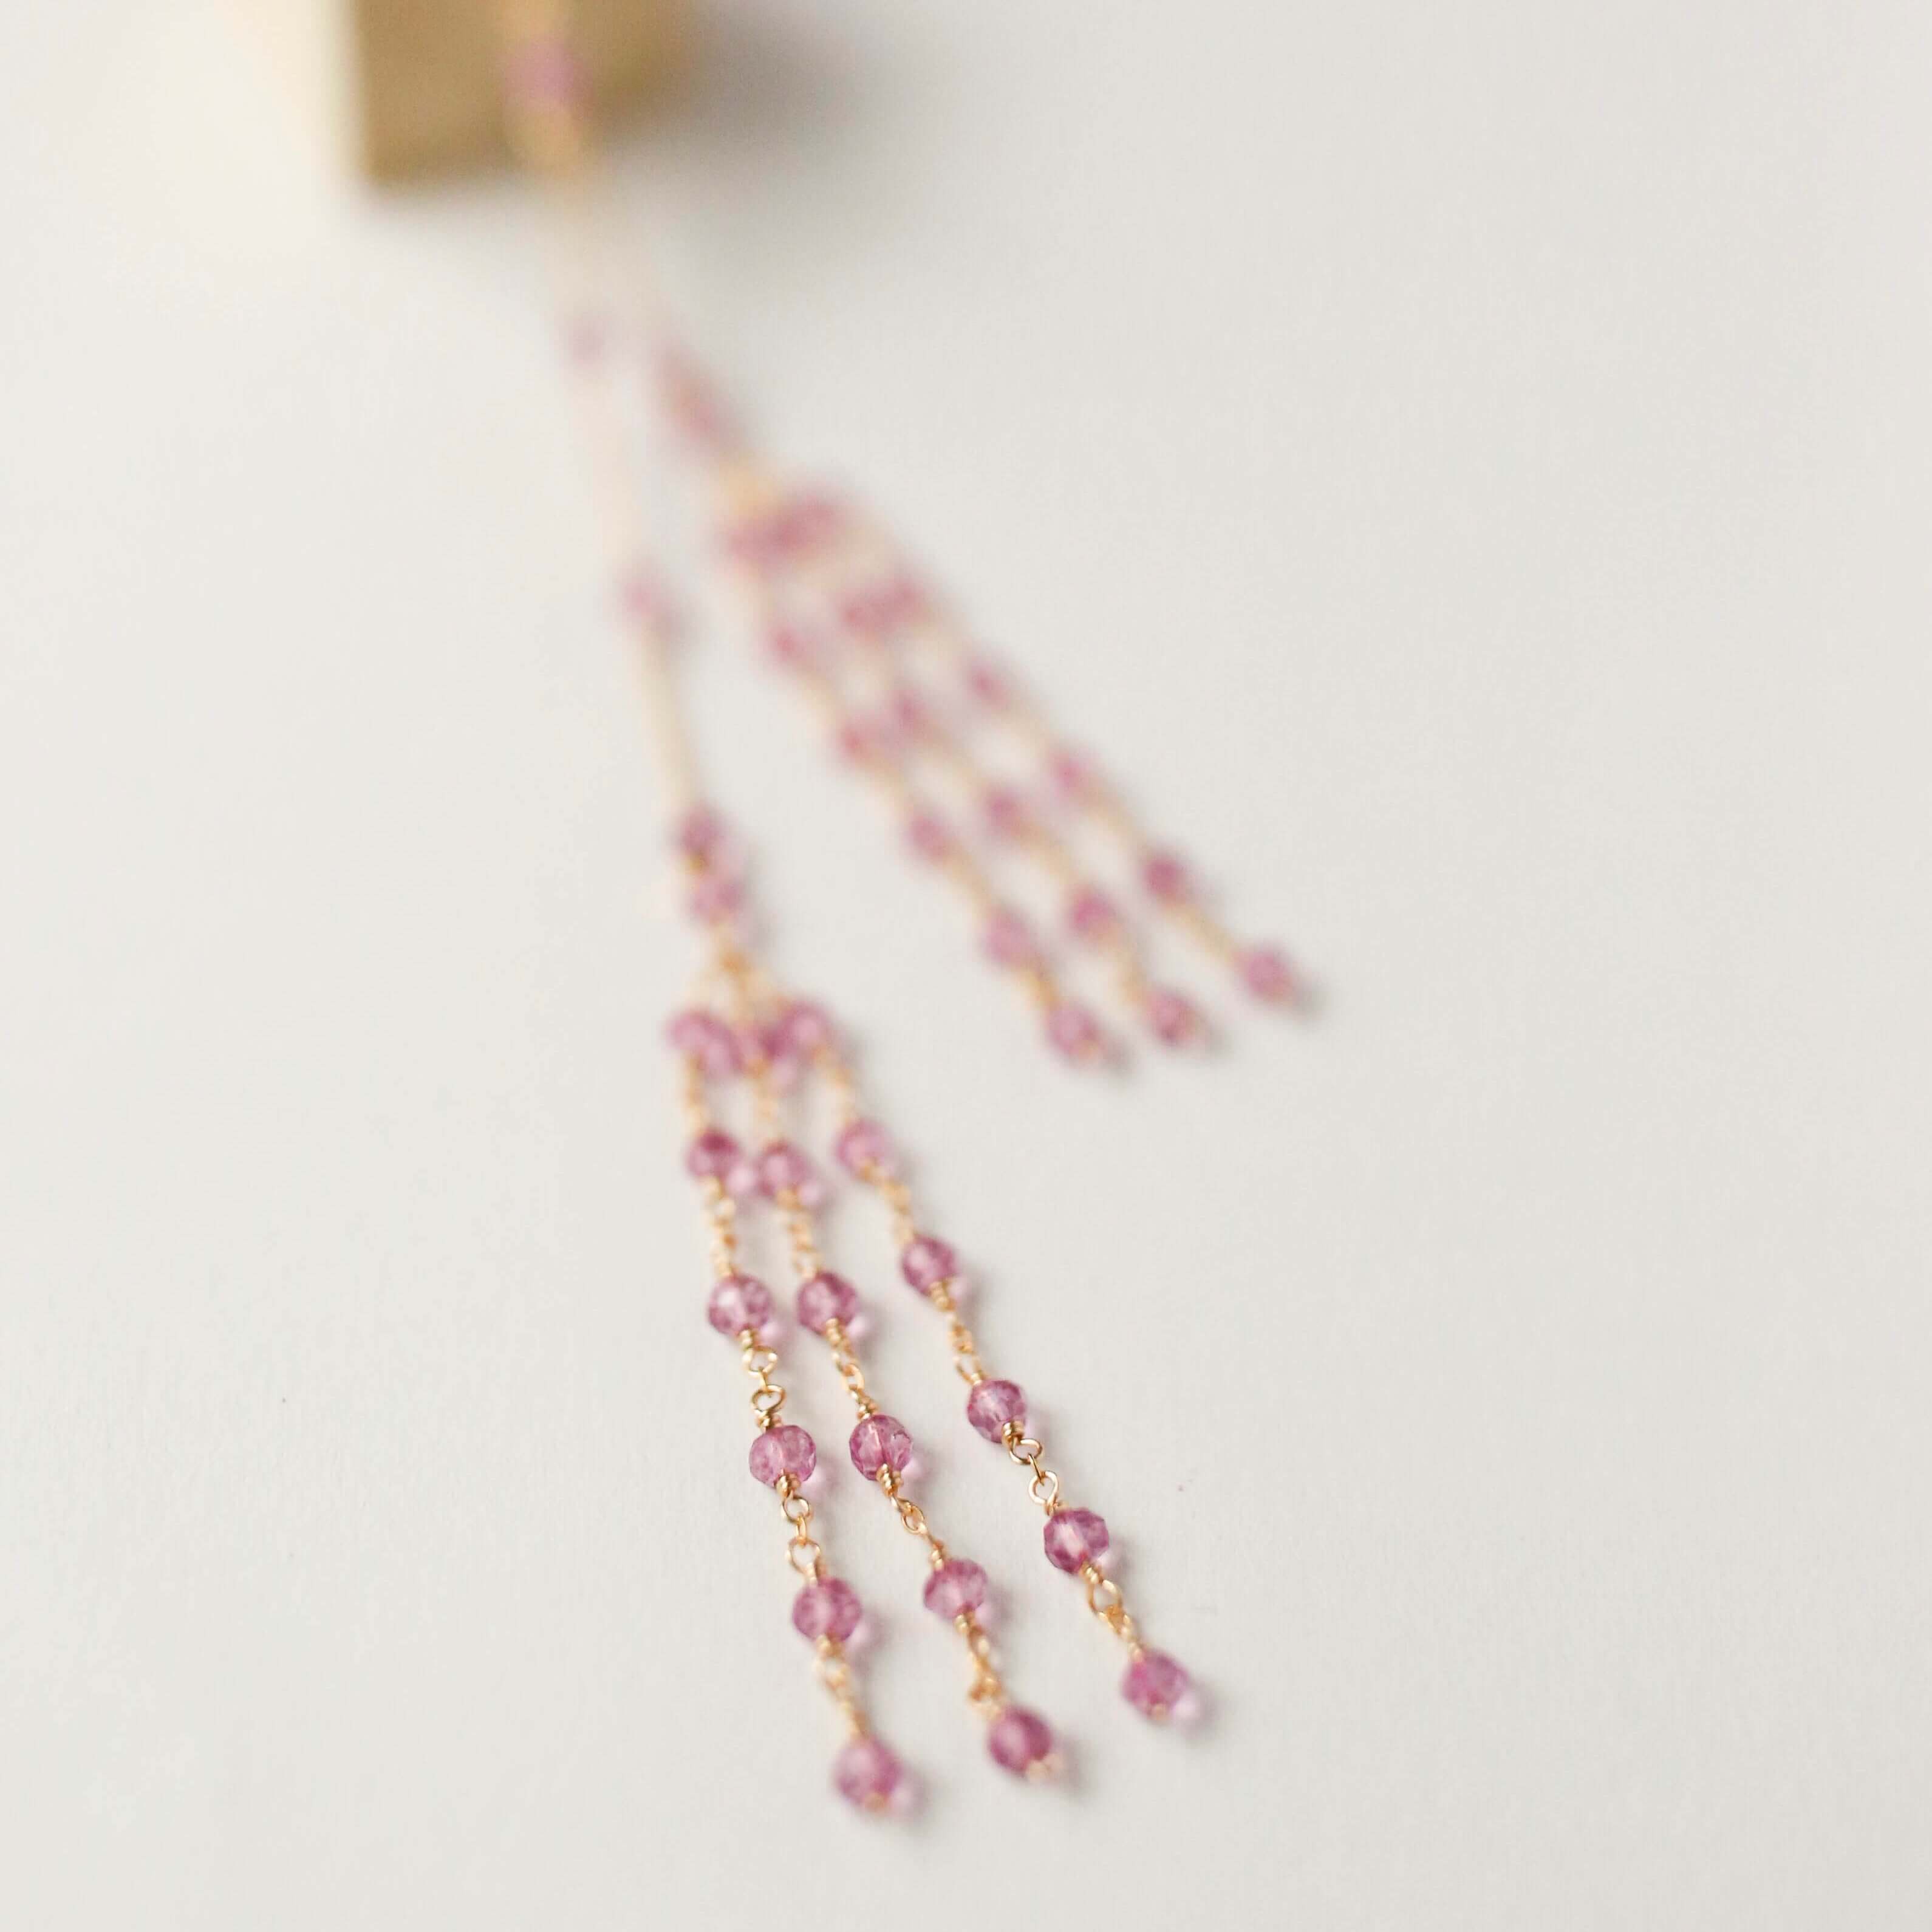 14k Gold Plated Pink Tourmaline Quartz Lariat Necklace with a stunning tassel